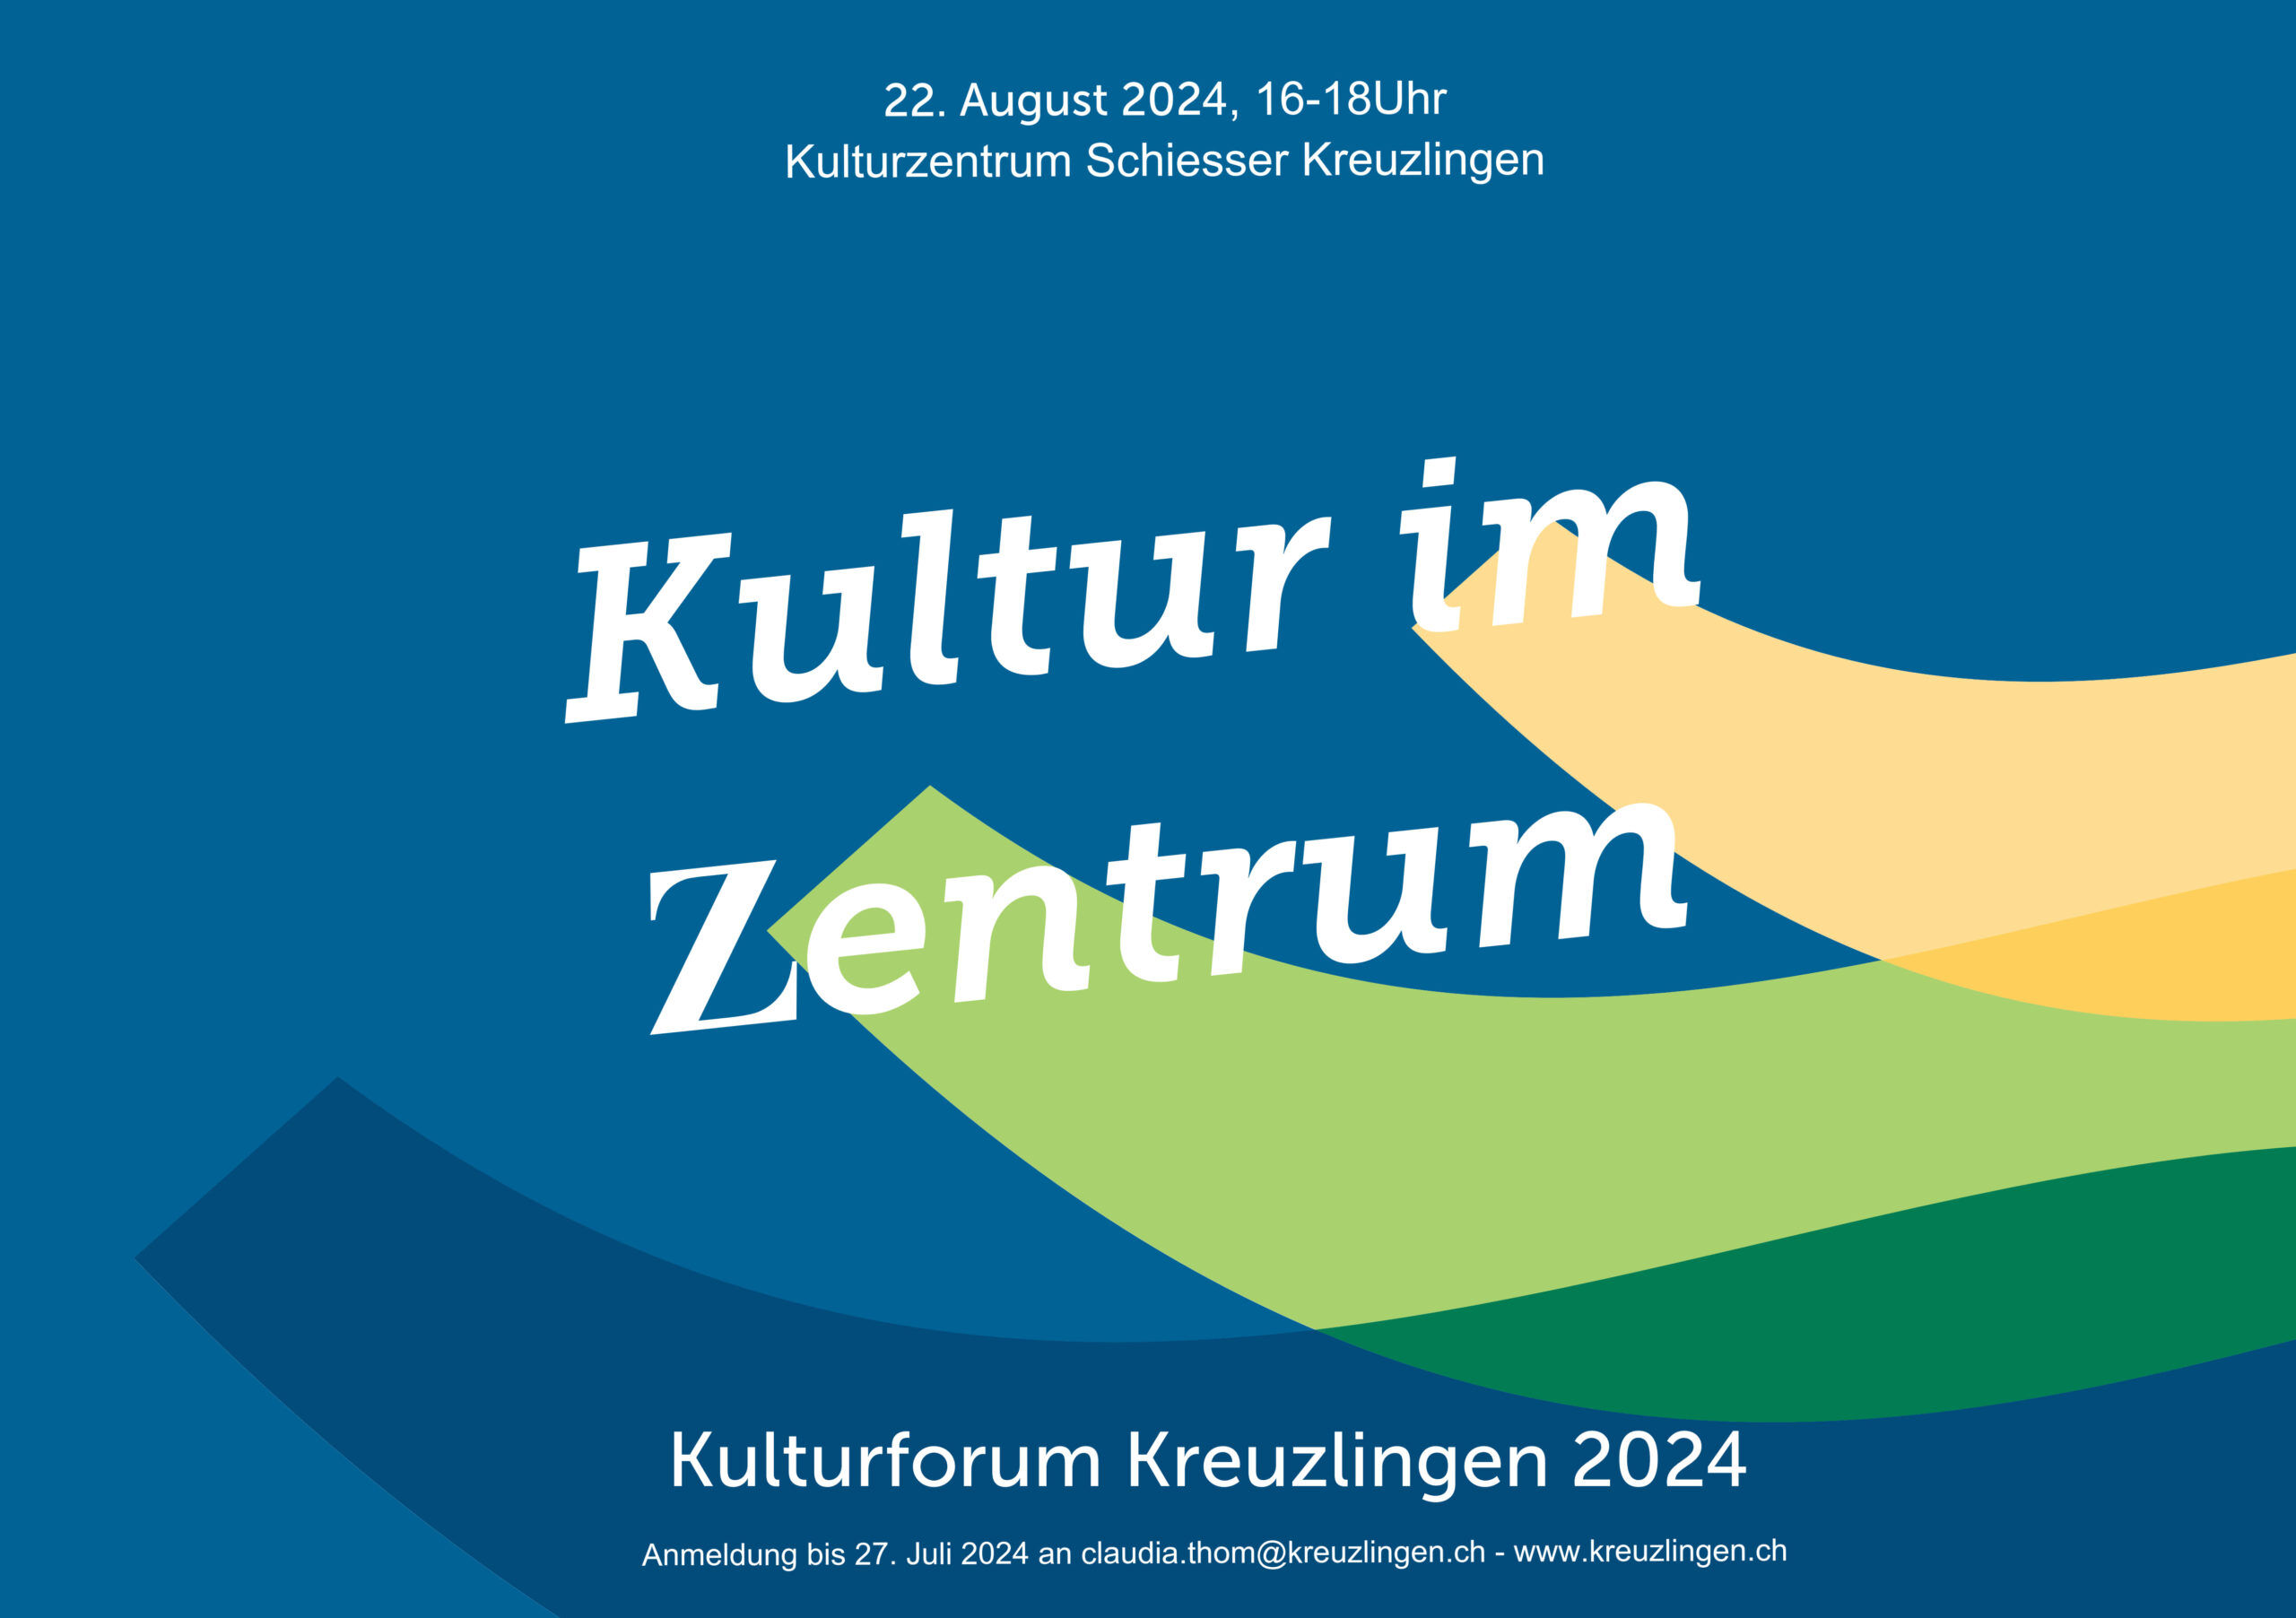 Kulturforum Kreuzlingen 2024 scaled